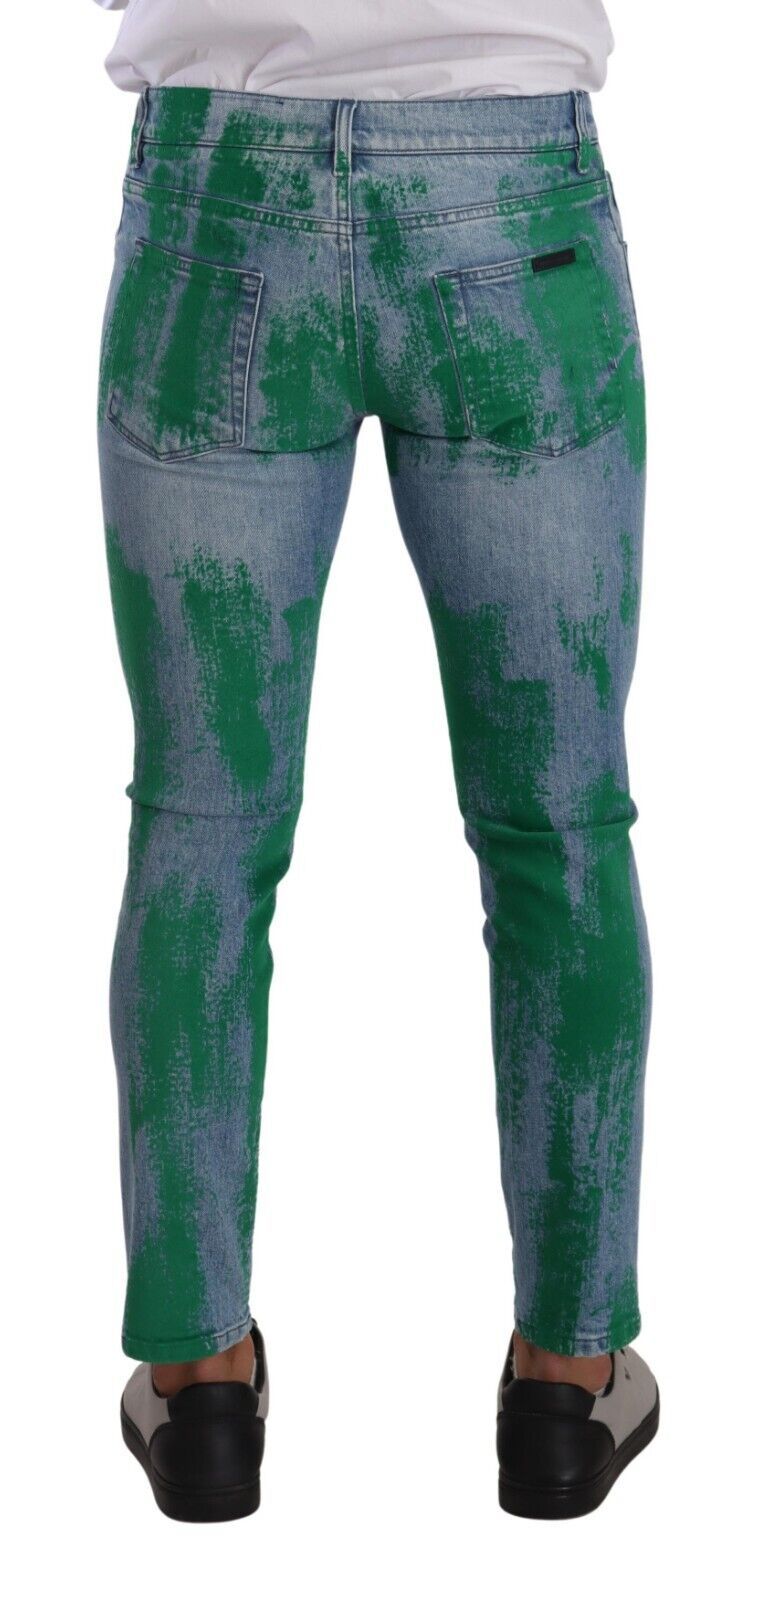 Dolce & Gabbana Chic Skinny Denim Jeans in Blue Green Wash